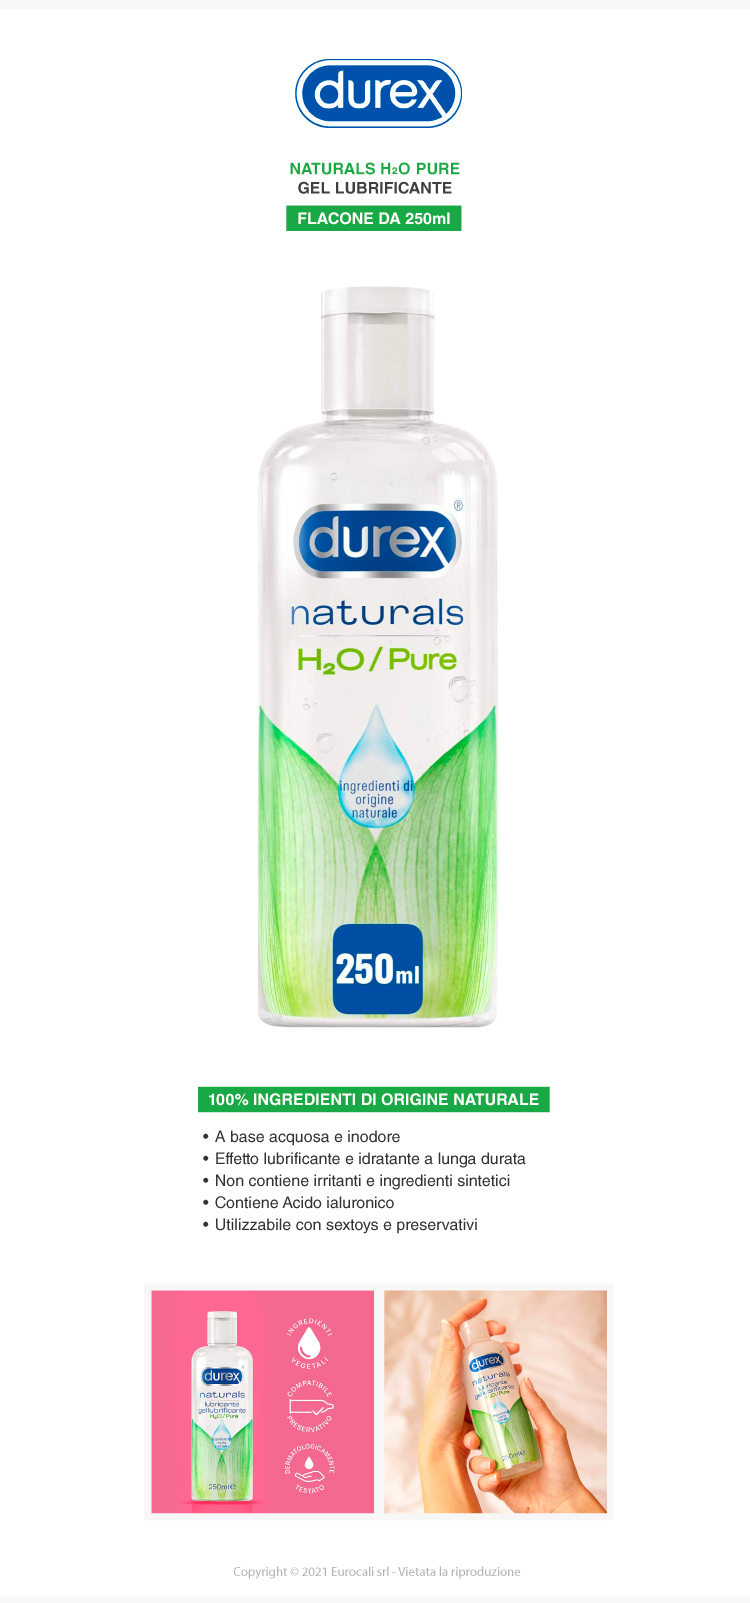 Durex Naturals H2O Pure Lubrificante gel intimo base acquosa ingredienti 100% naturali 250ml